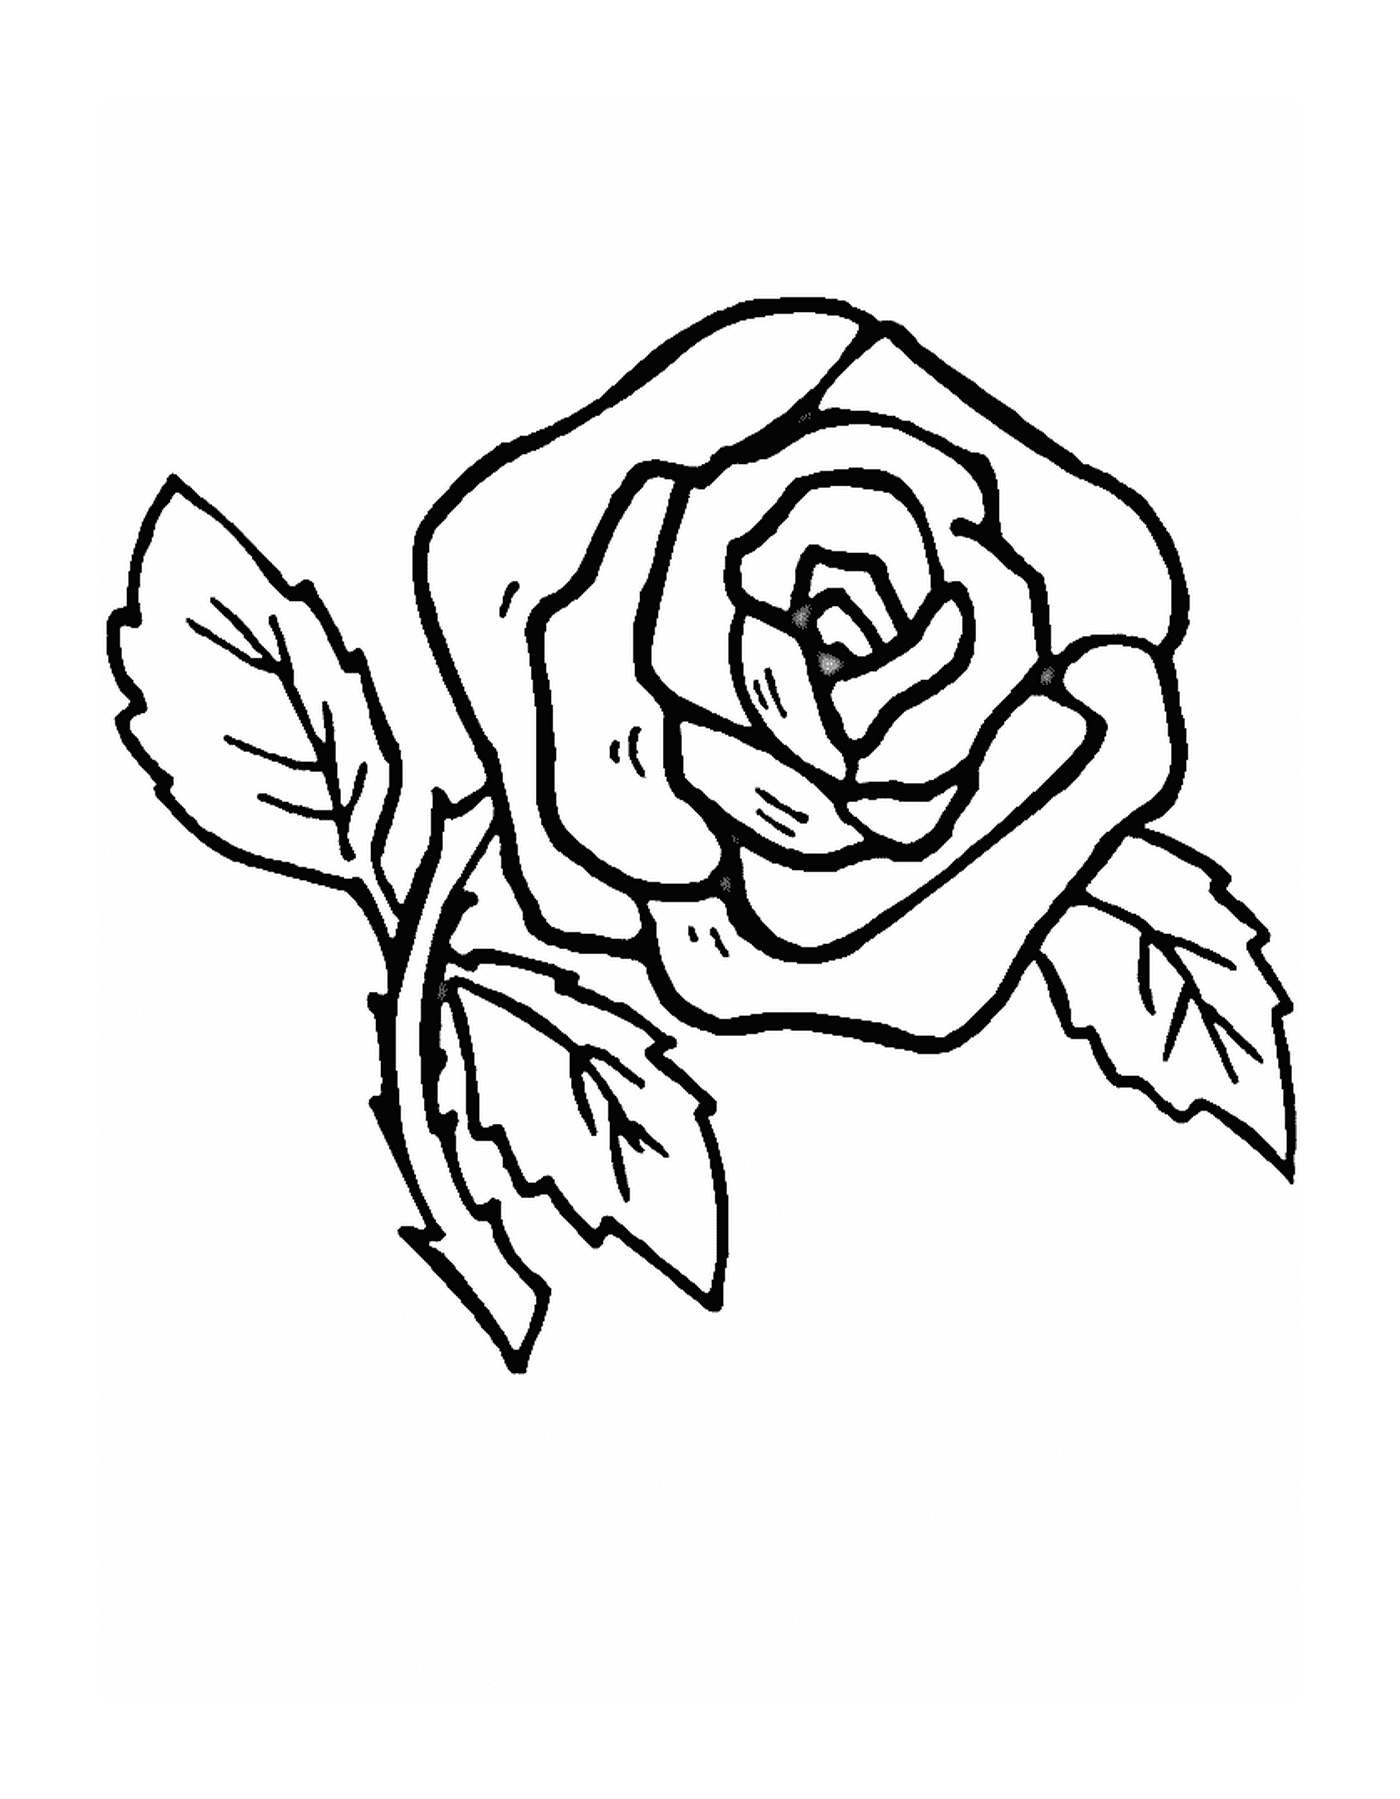  A bright rose 